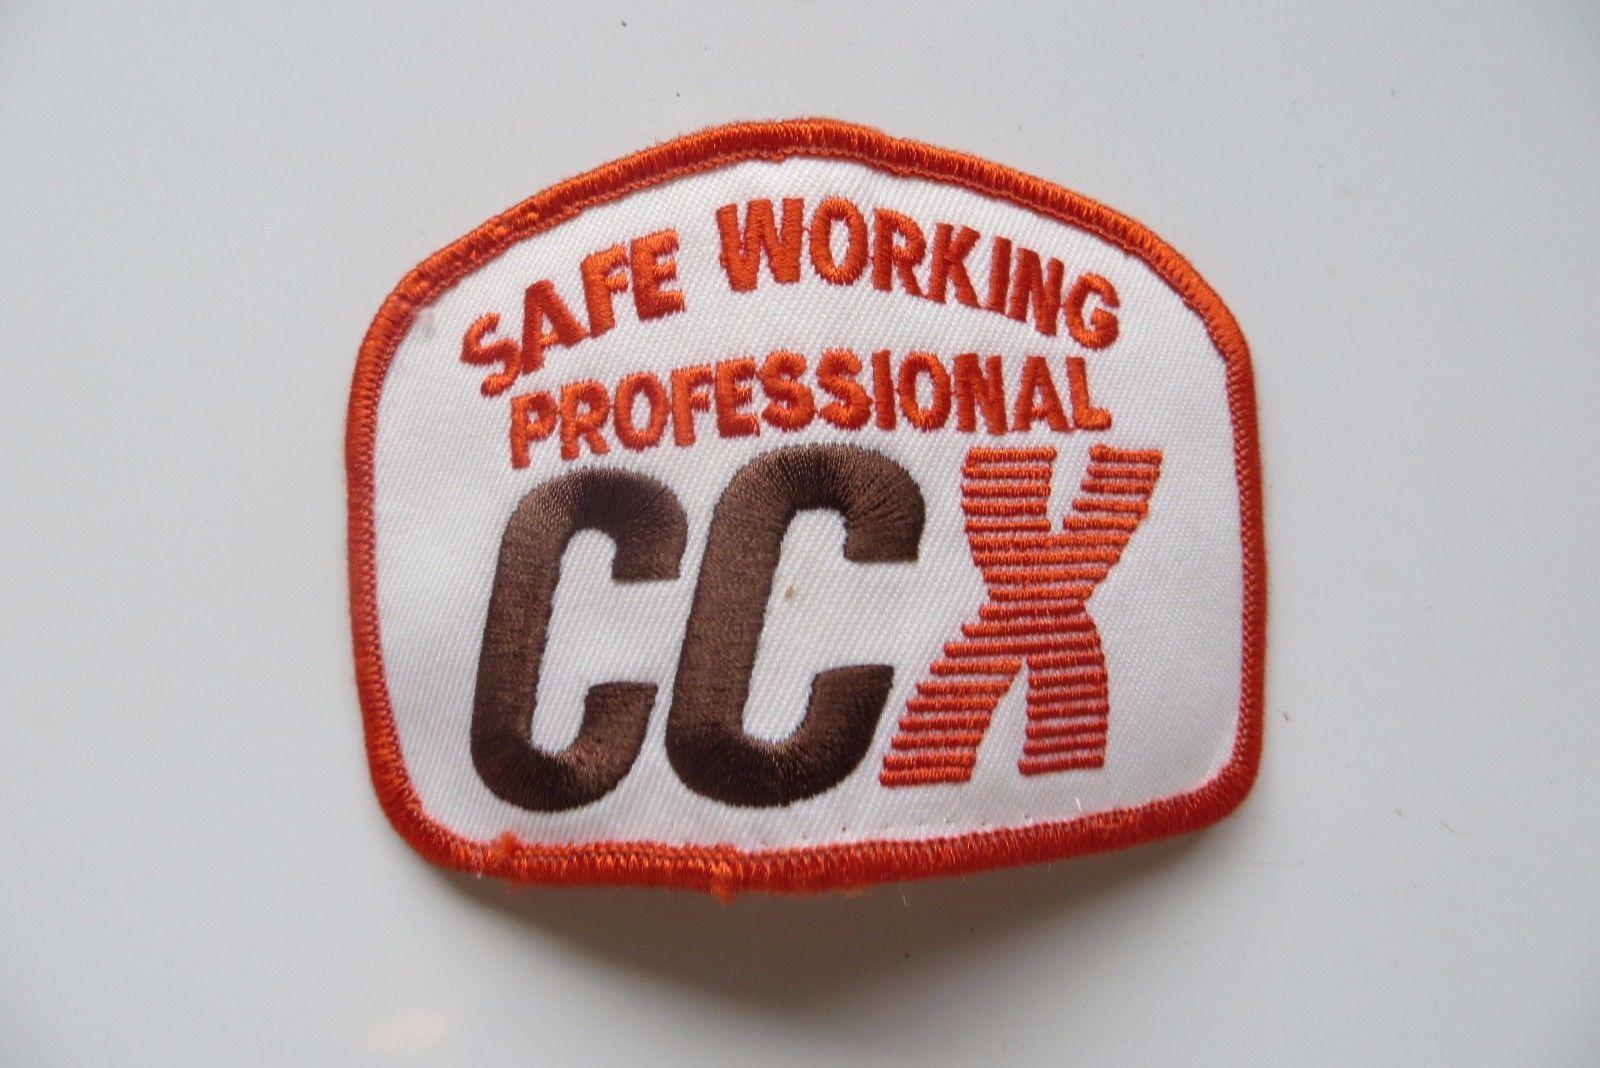 CCX Logo - CCX SAFE WORKING PROFESSIONAL, ORIGINAL award co logo trucking semi